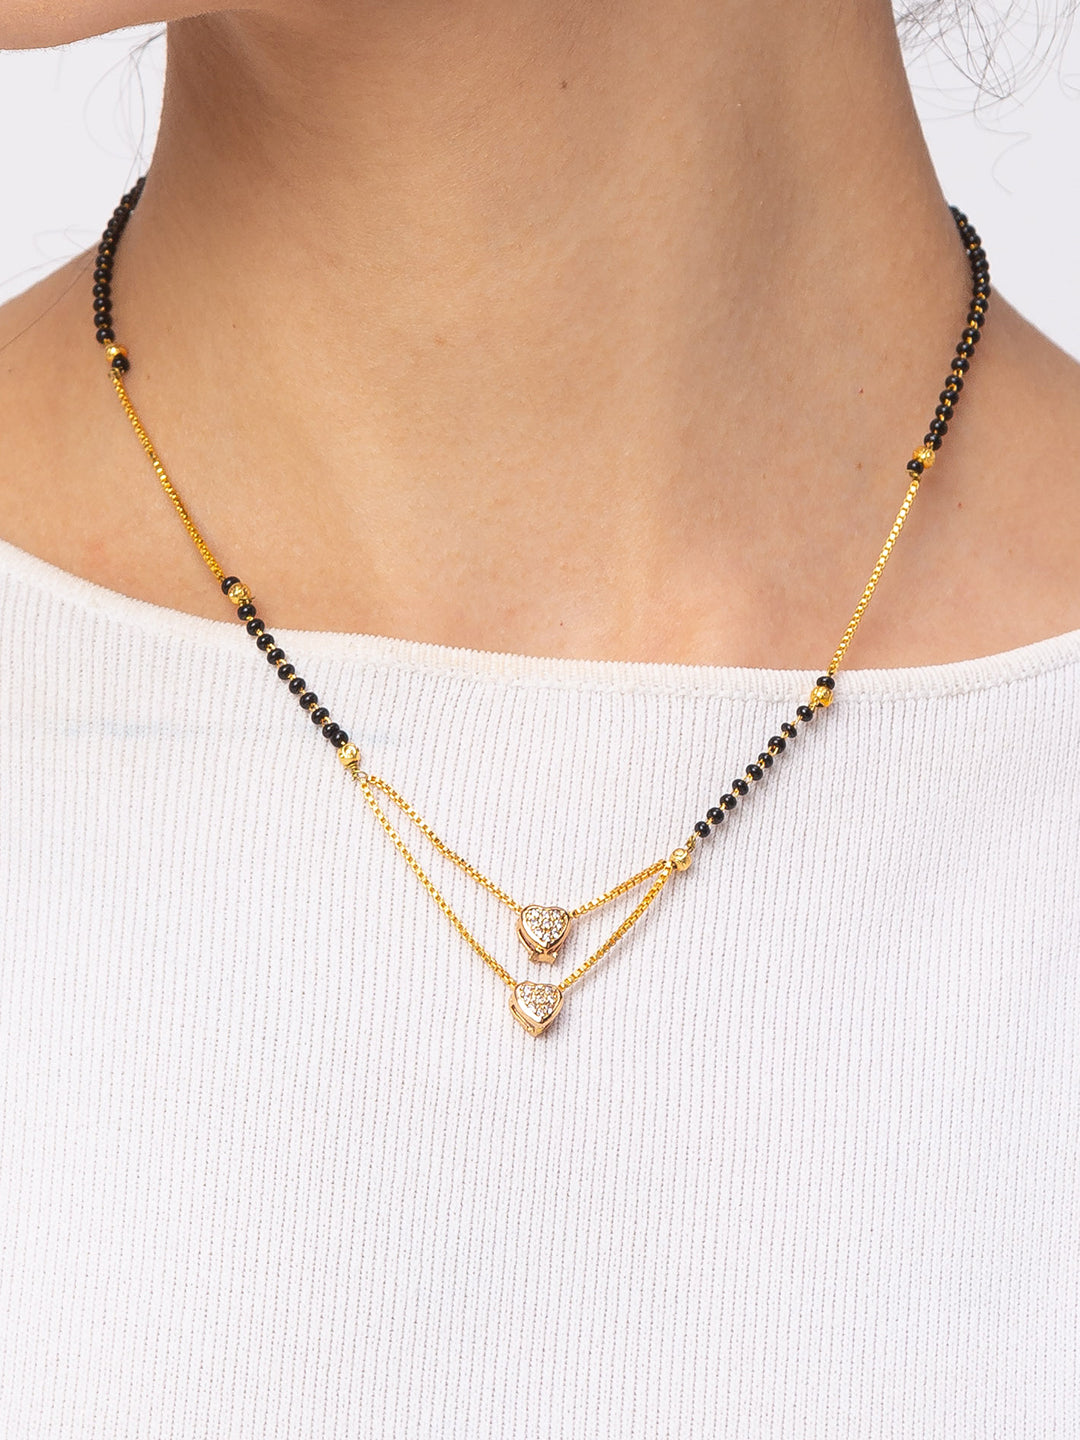 image for Short Mangalsutra Designs Gold Plated Heart Shape American Diamond Pendant Black Beads मंगलसूत्र